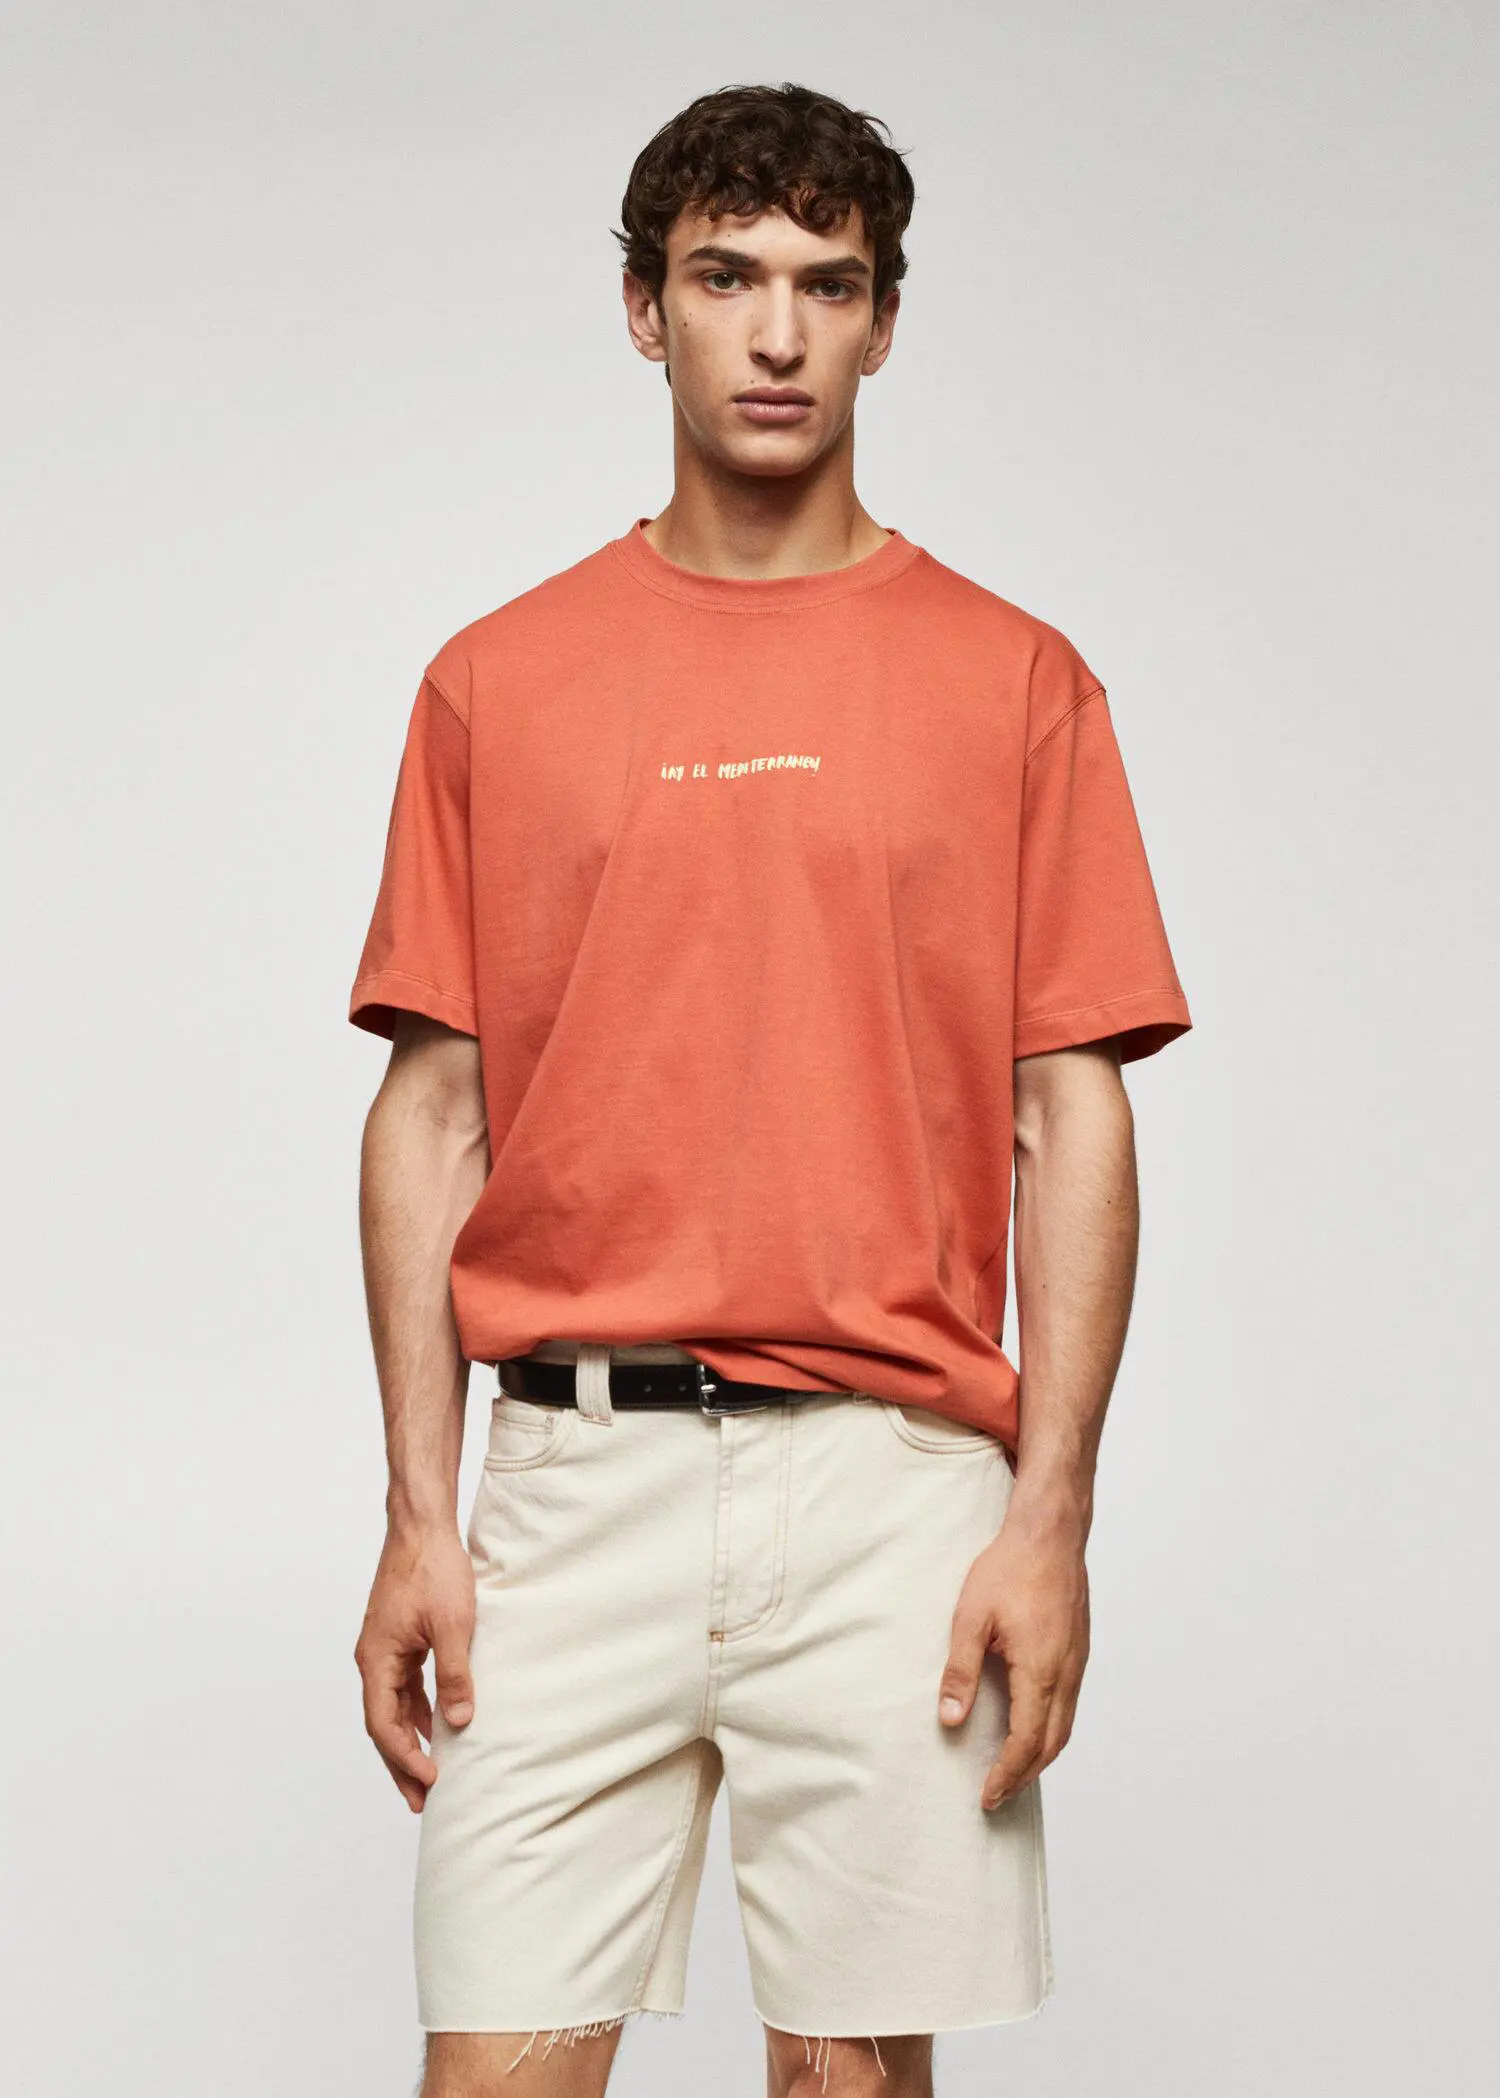 Mango Adriana Eskenazi x Mango t-shirt. a man wearing a red shirt and beige shorts. 